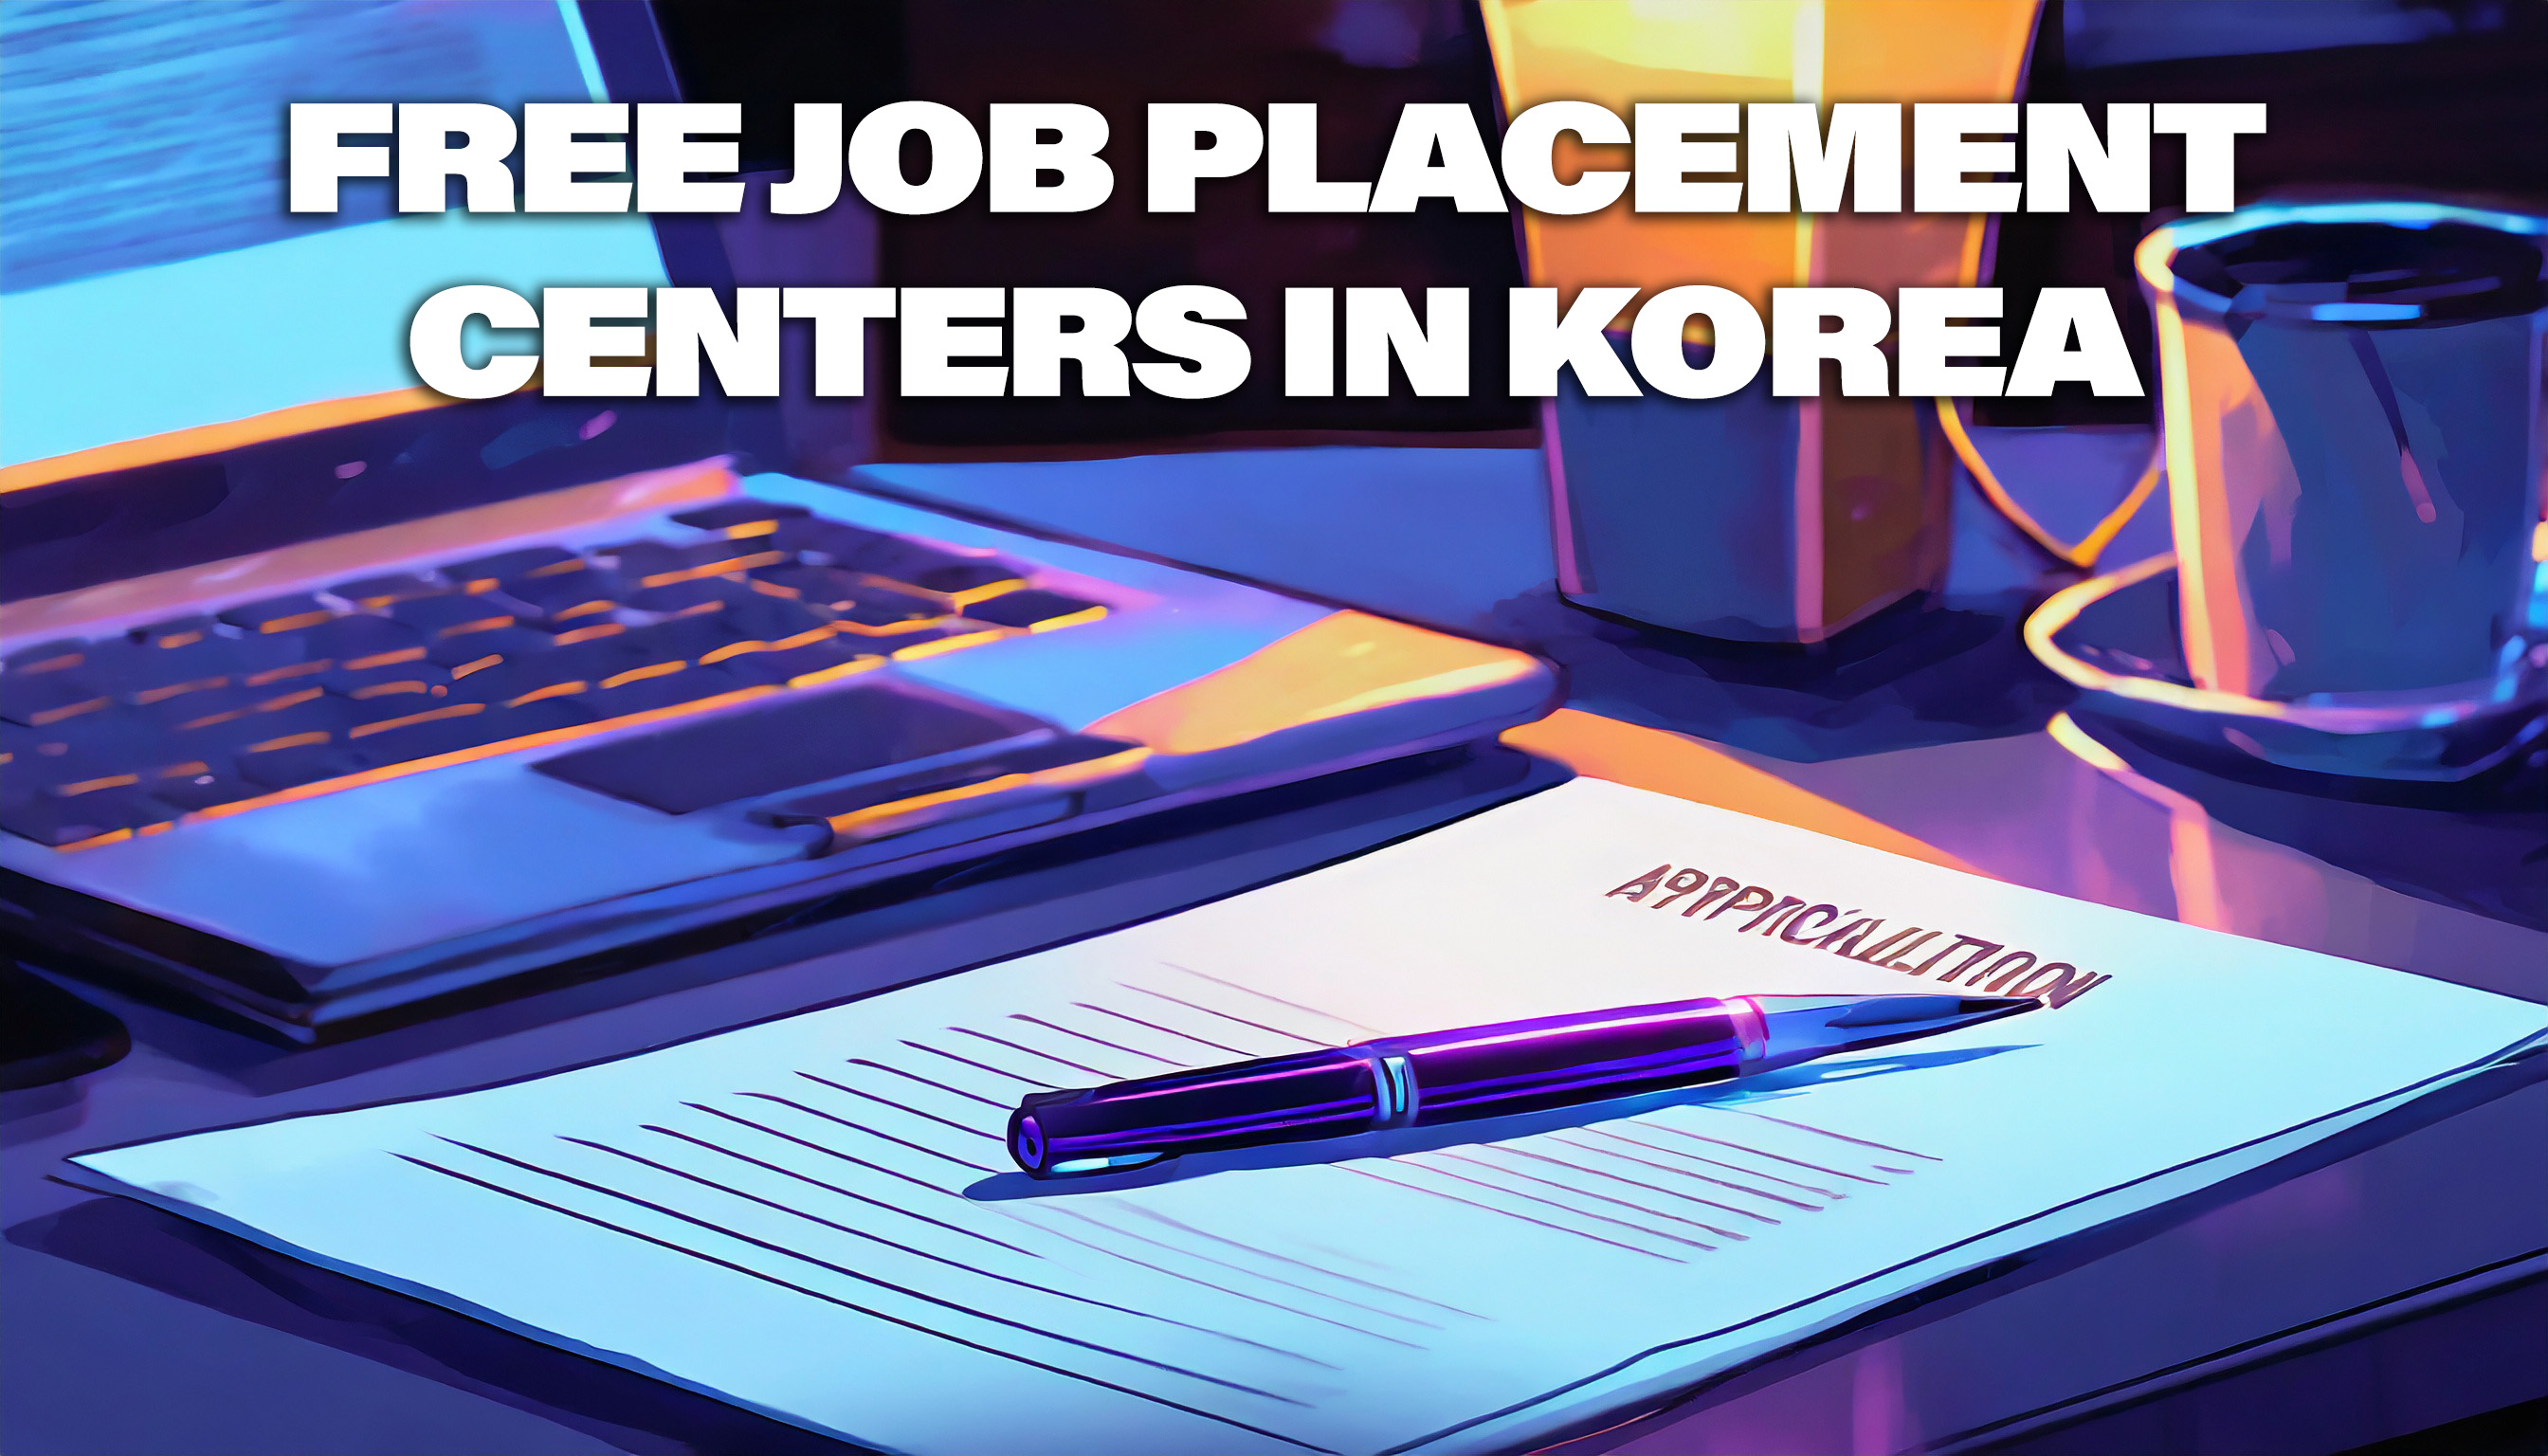 Job placement centers in korea.jpg